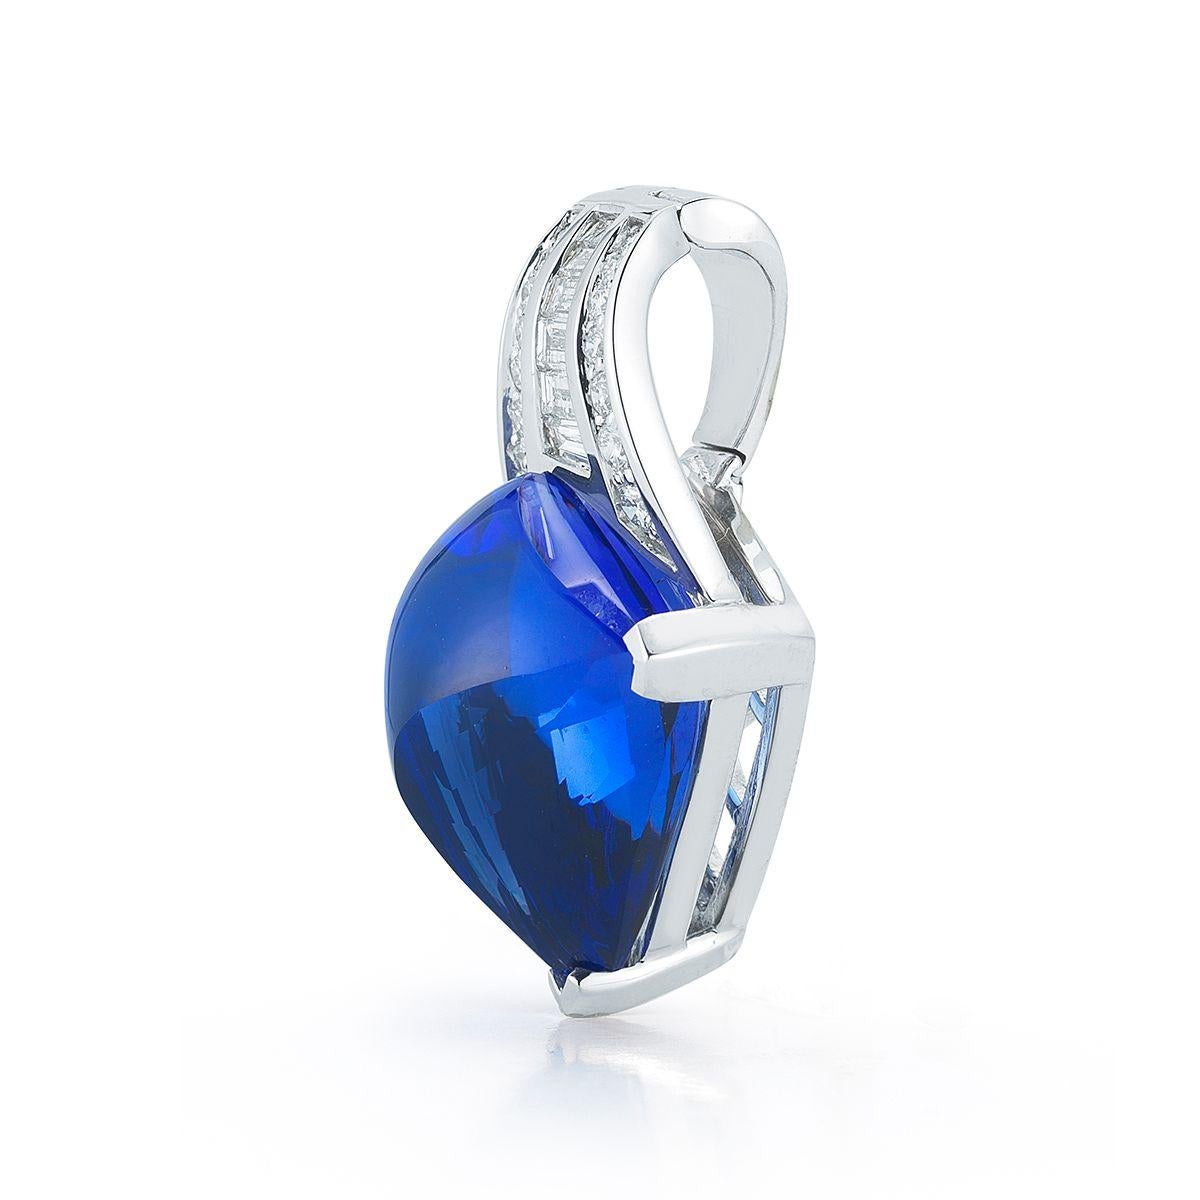 TANZANITE PENDANT
A uniquely cut Tanzanite shines in an asymmetrical diamond slide
pendant.
Item: # 01662
Metal: 18k W
Color Weight: 30.75 ct.
Diamond Weight: 0.85 ct.